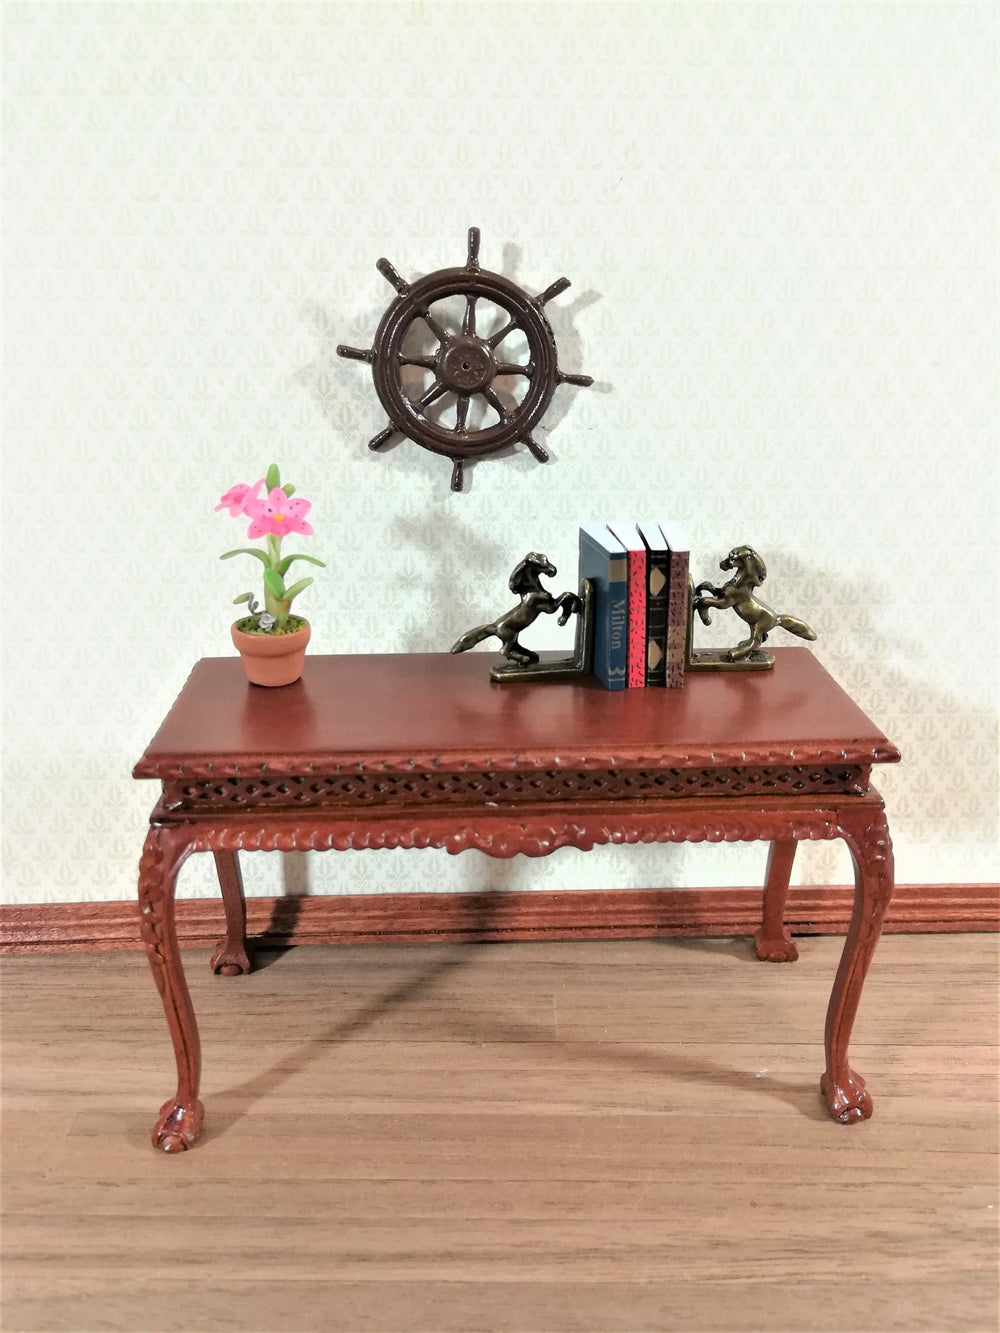 Dollhouse Miniature Wheel Ship or Boat Wall Decoration 1:12 Scale - Miniature Crush